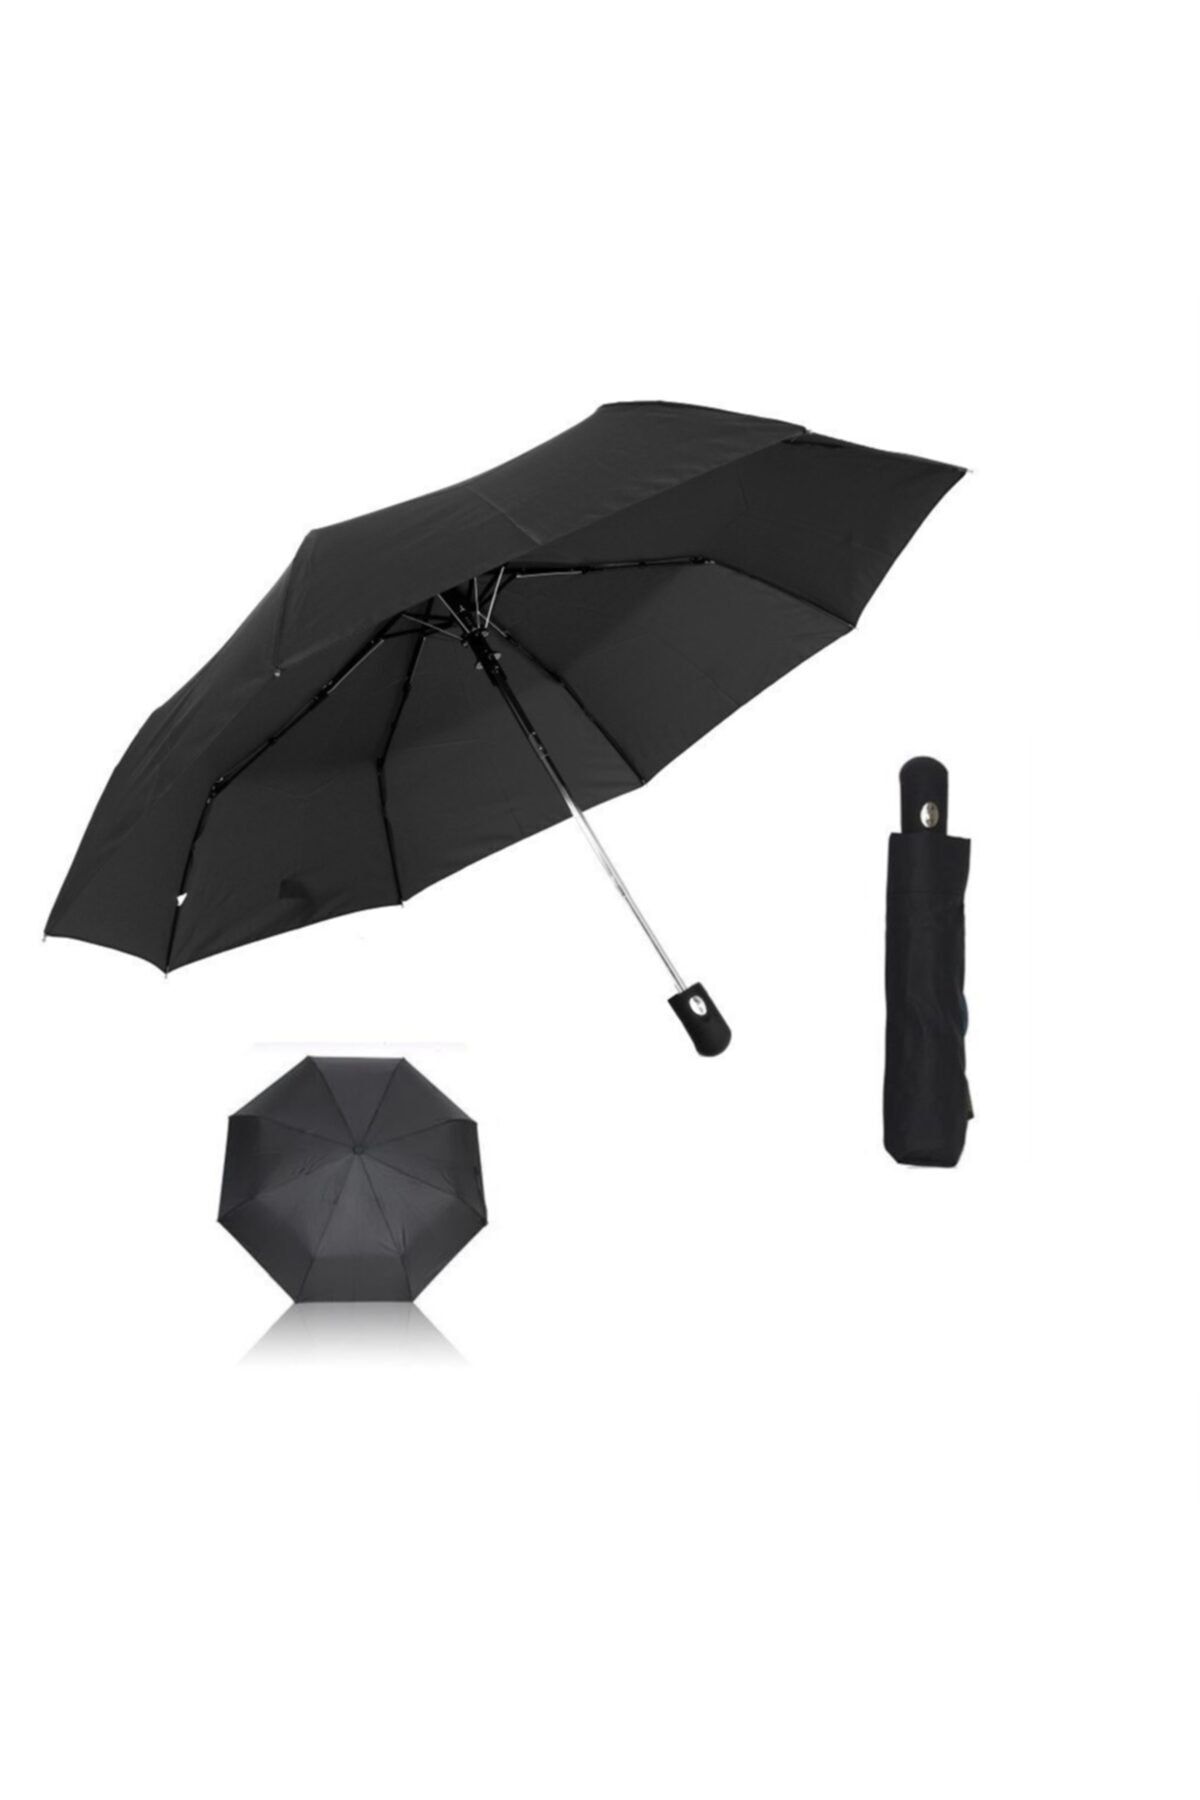 Vardem Katlanabilir Siyah Şemsiye (pongee Kumas) 8 Telli Otomatik